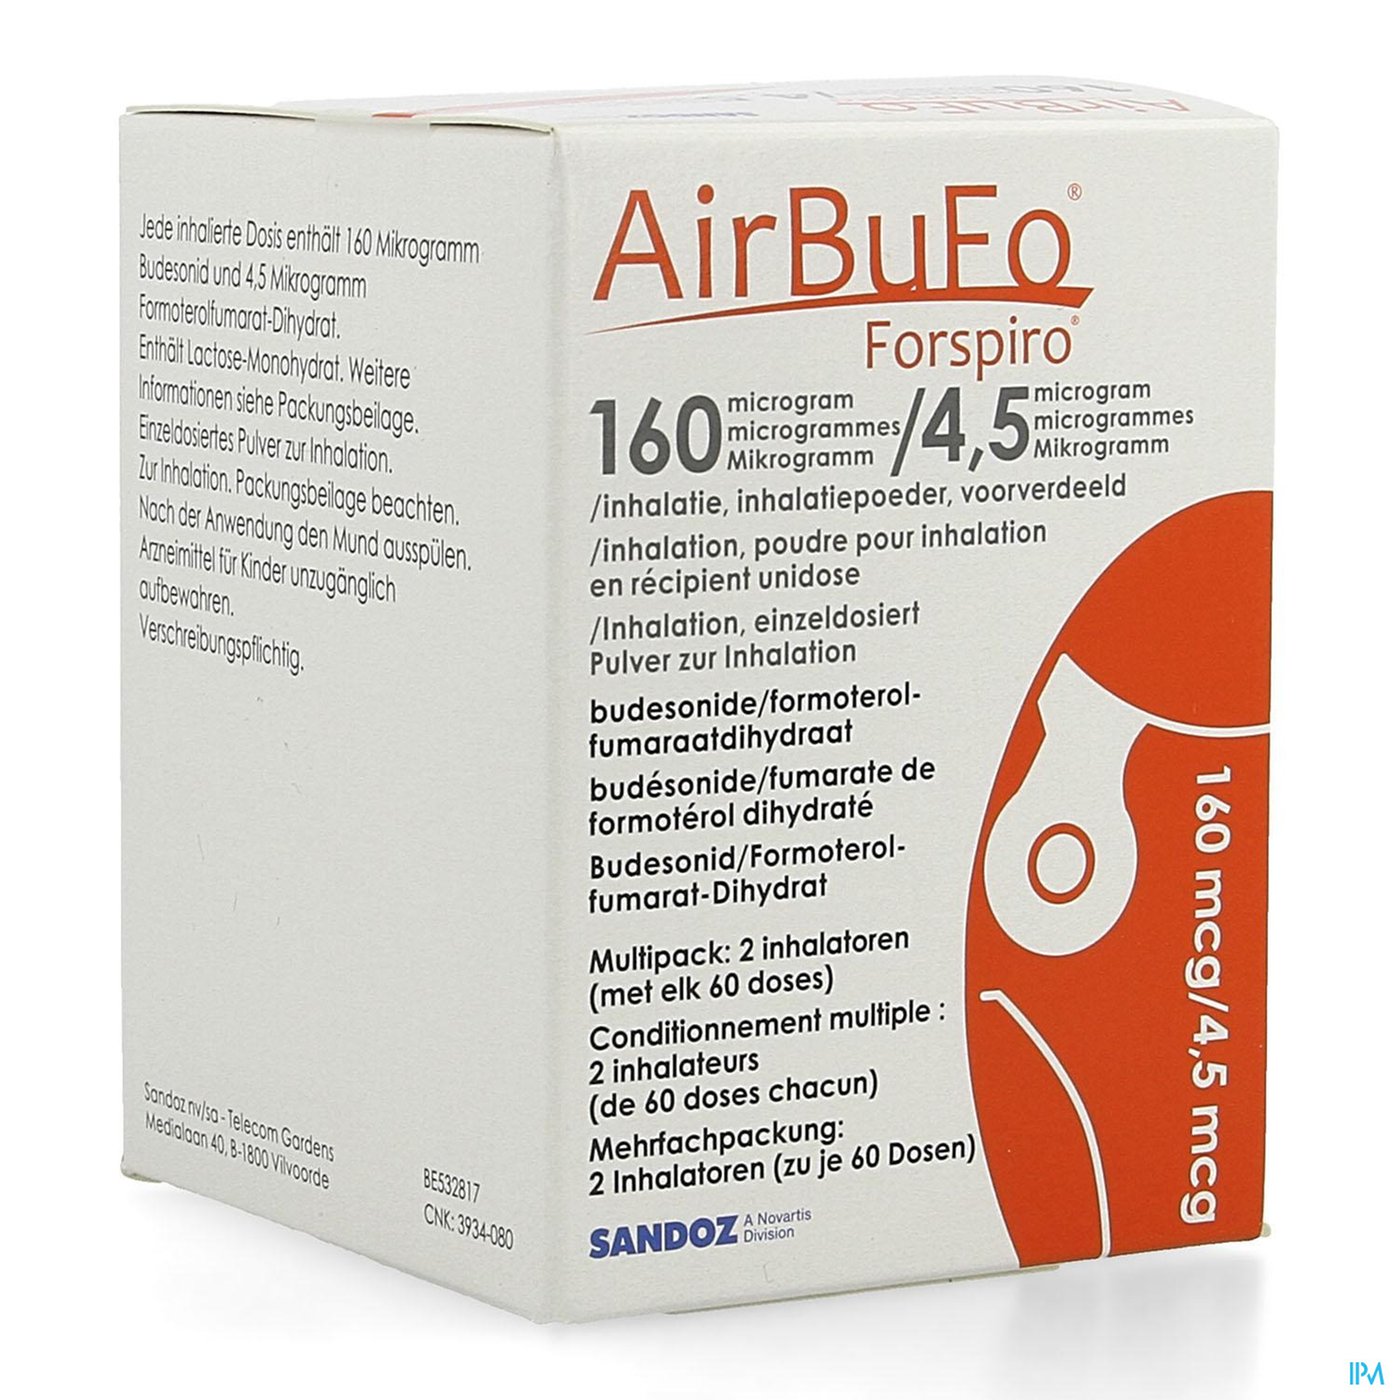 Airbufo Forspiro 160mcg/4,5mcg Inhal. 2 X 60dosis packshot